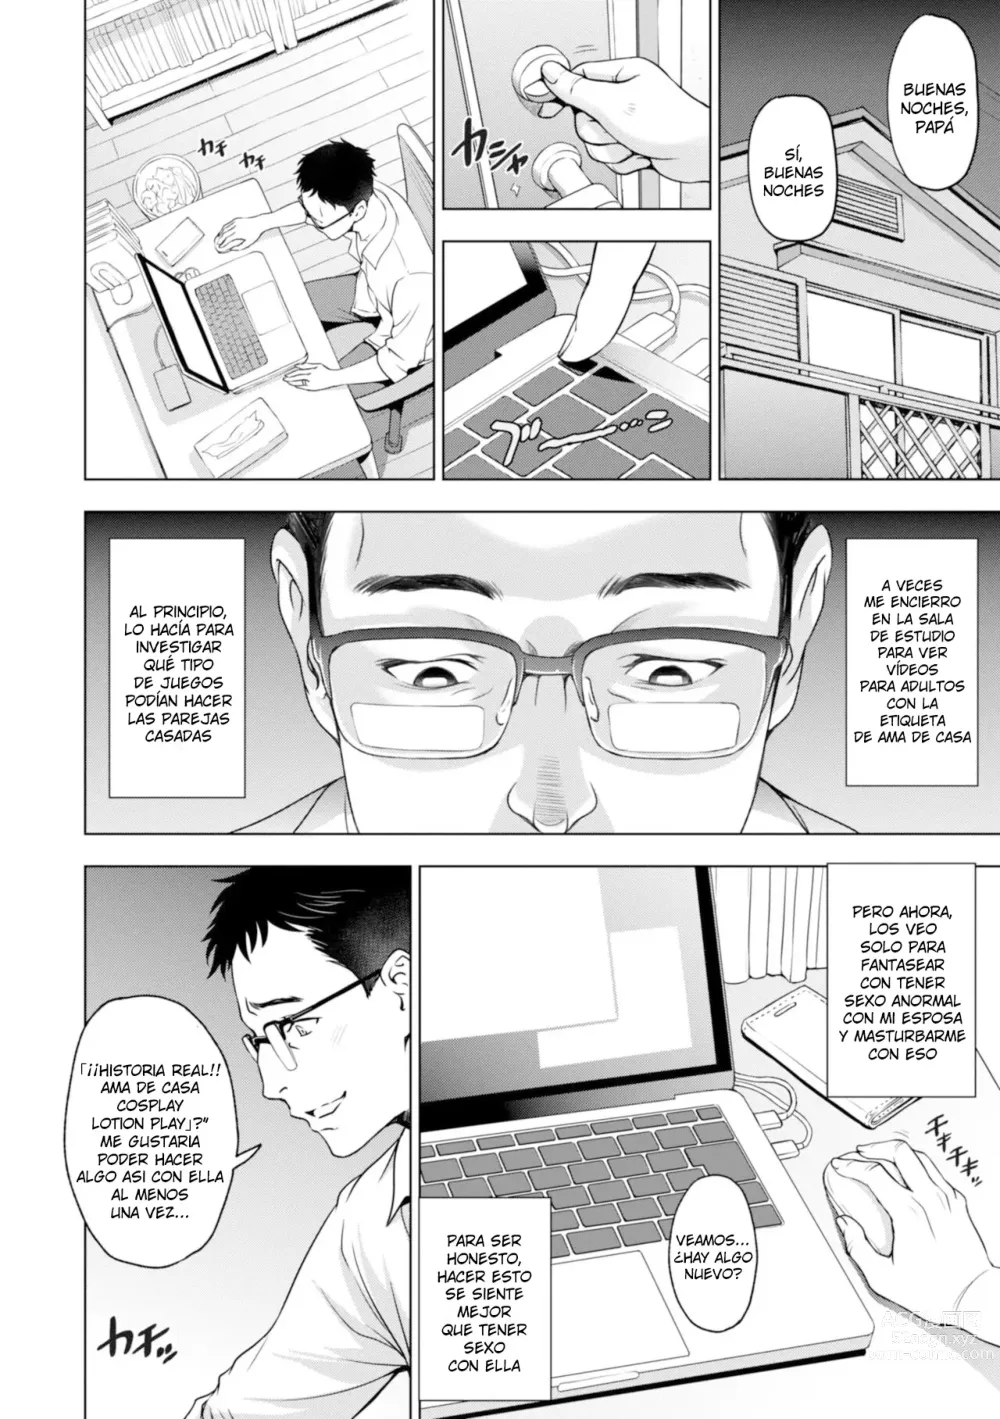 Page 6 of manga Nettori Netorare Ep.4 ~Esposa . El caso de Saori Sudou (epílogo)~